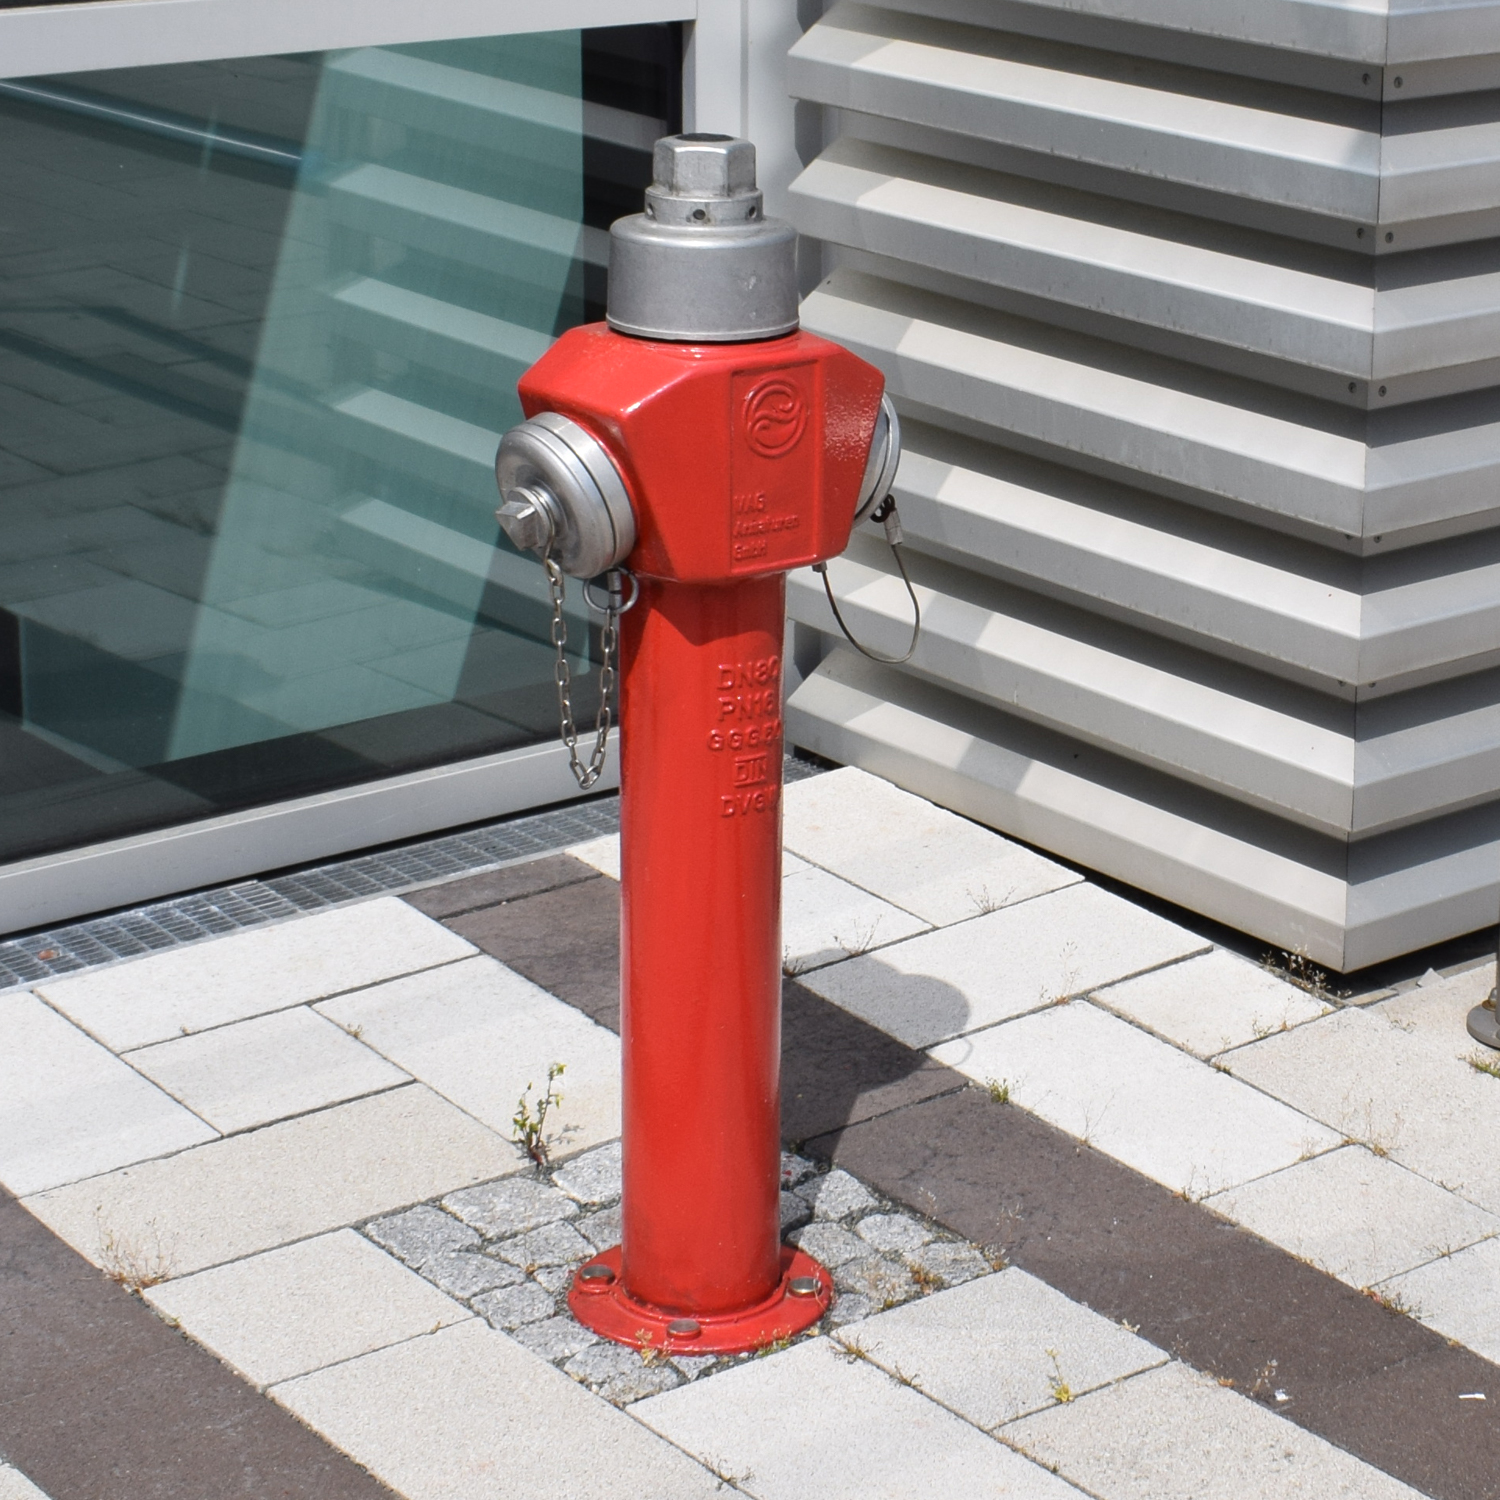 Pillar hydrant